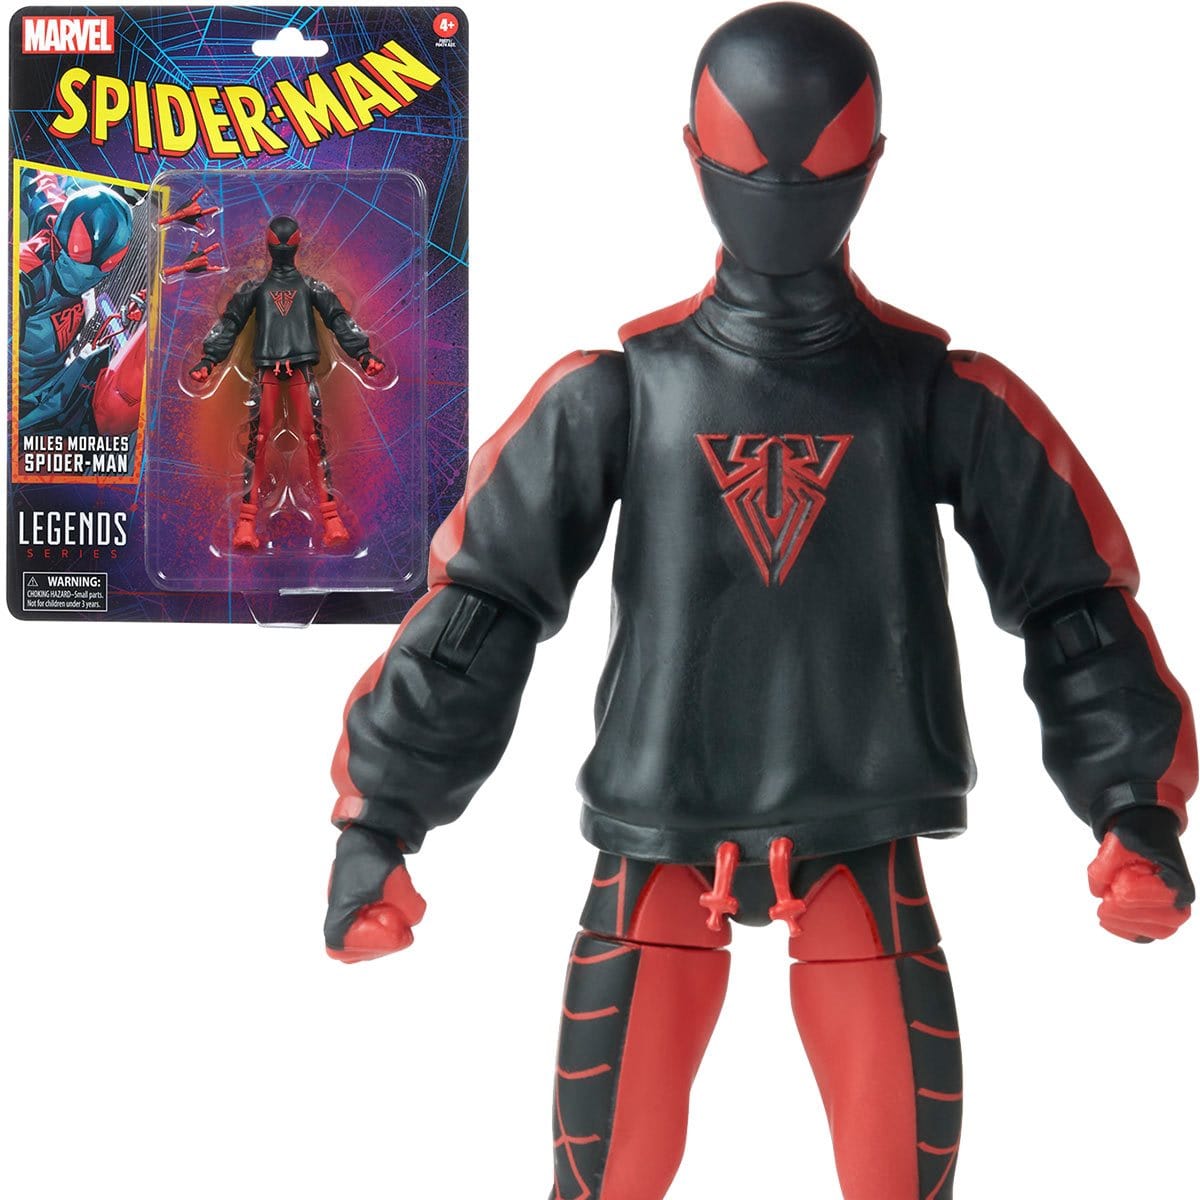 Spider-Man Retro Marvel Legends Miles Morales Spider-Man 6-Inch Action Figure..